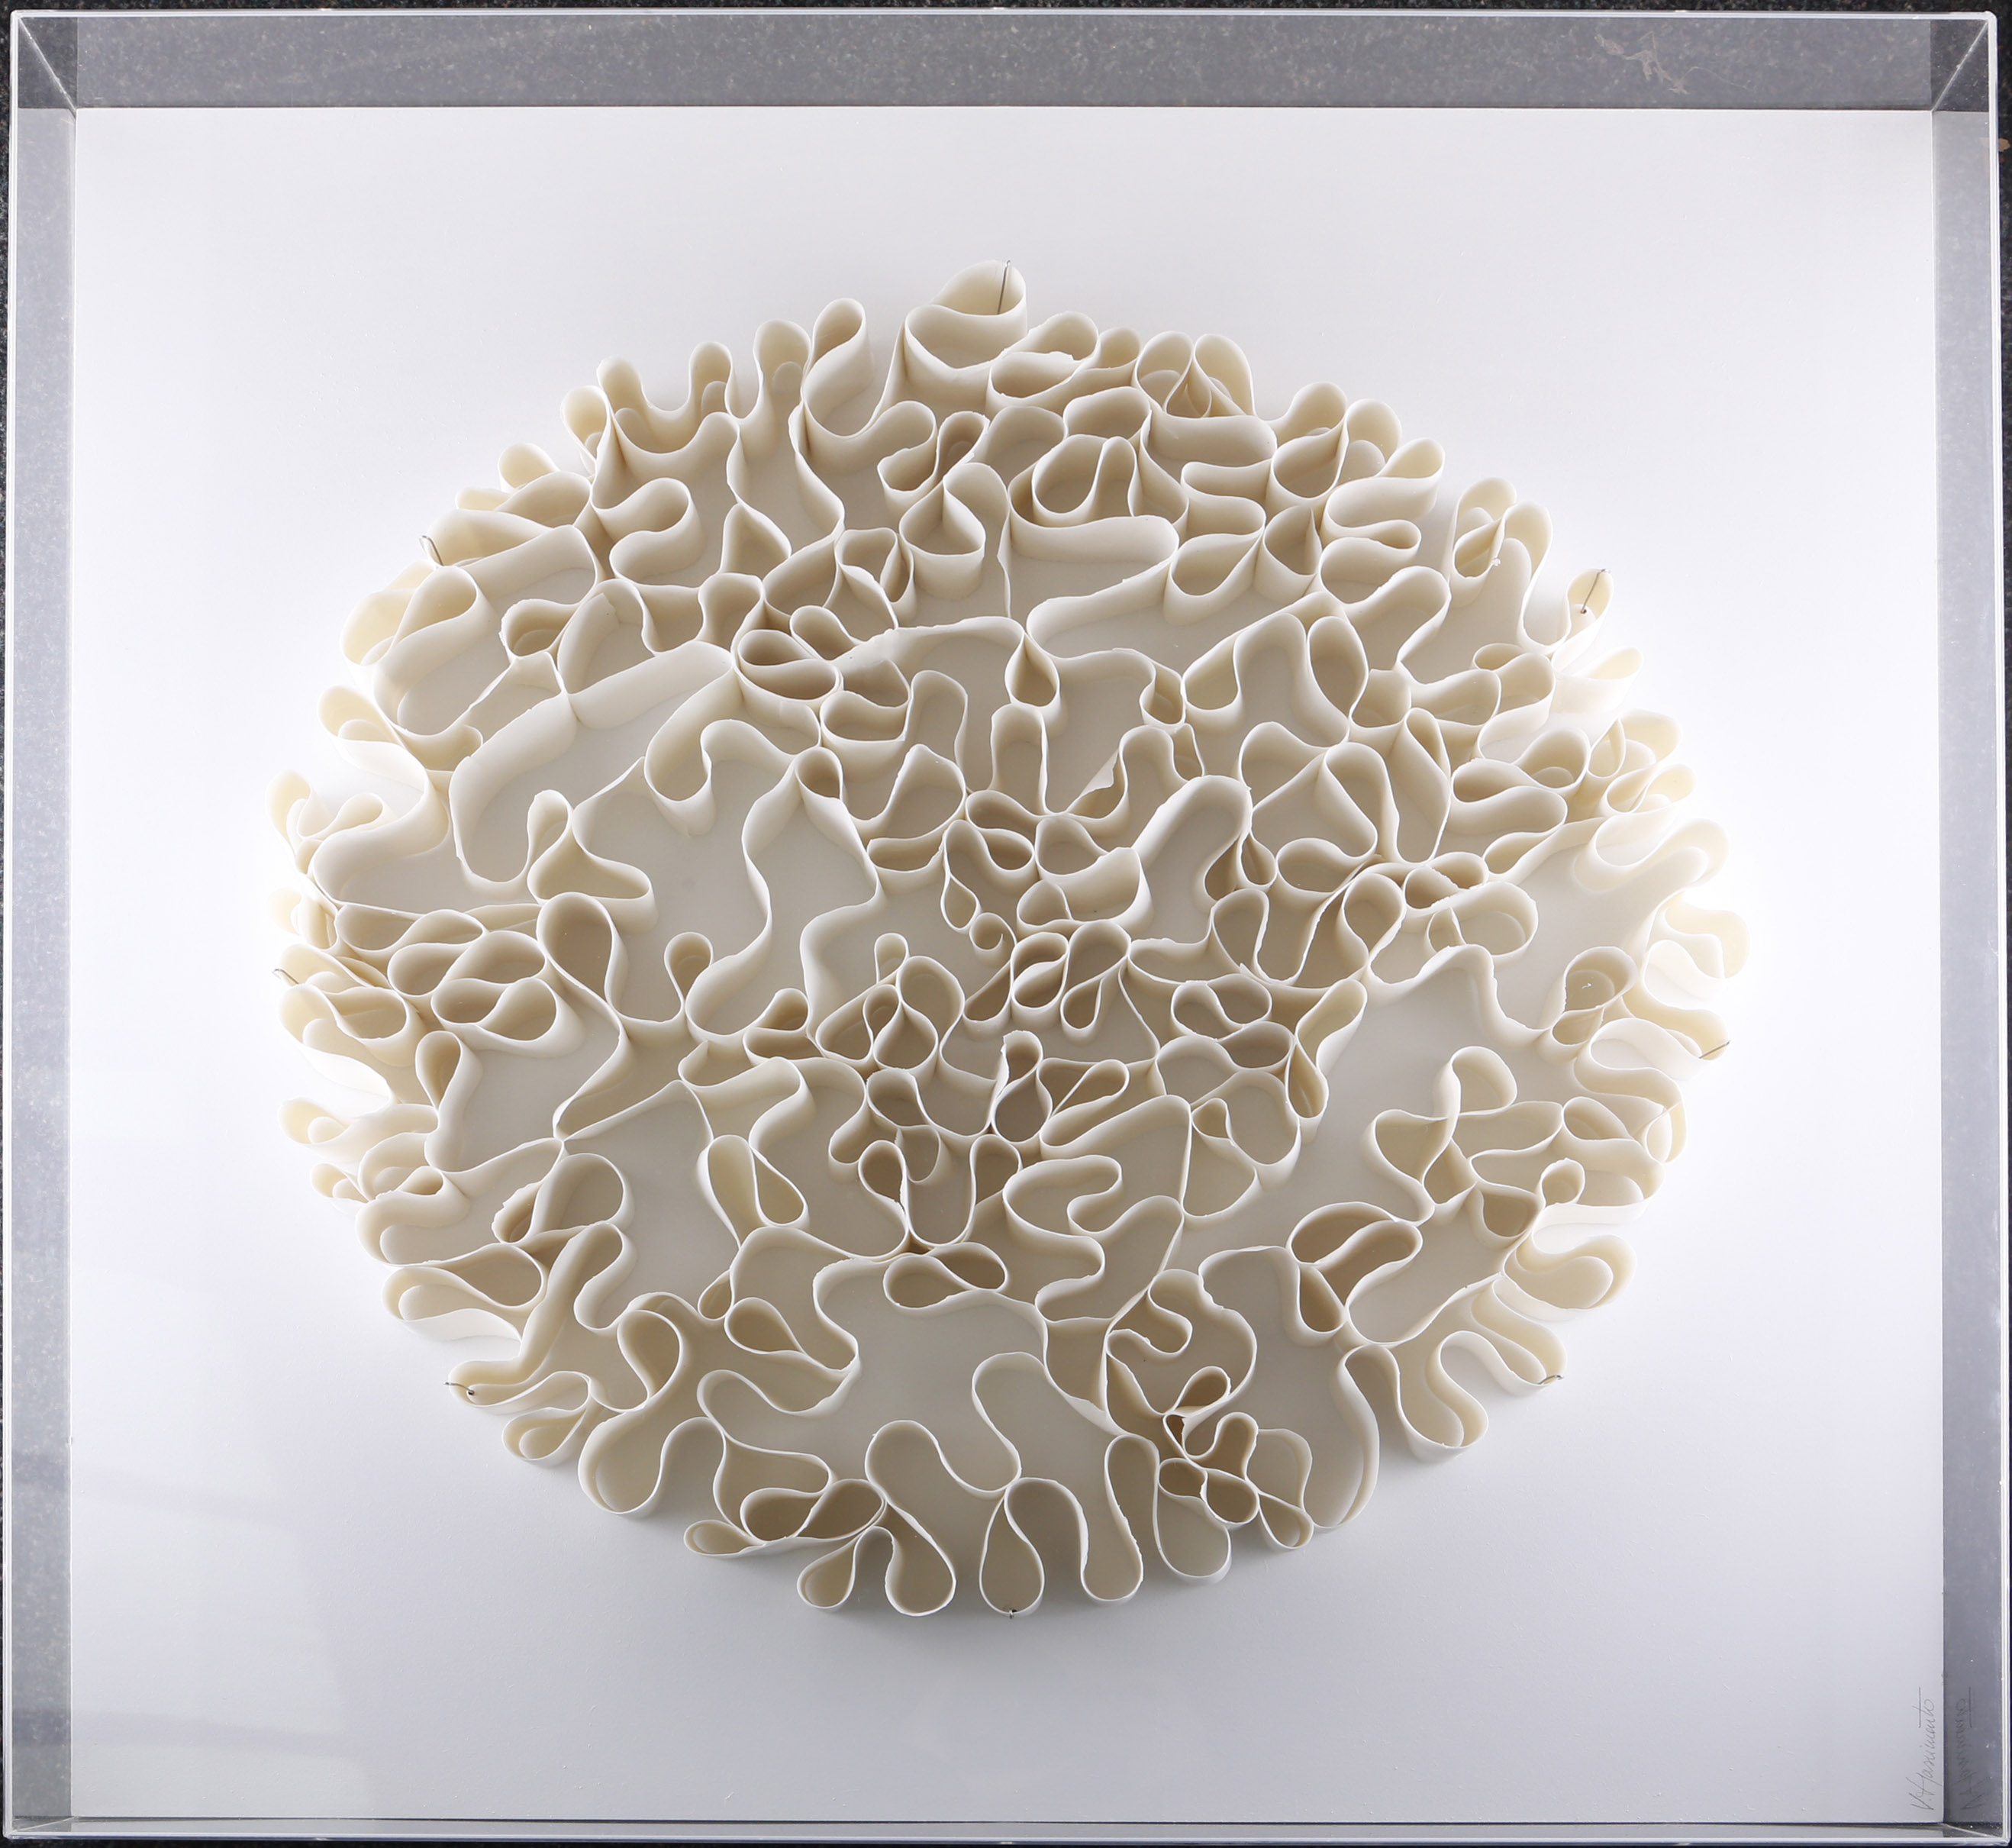 Valeria Nascimento (Brasil, 1962), Maze, 2009, ivory porcelain sculptural group on board, cased in